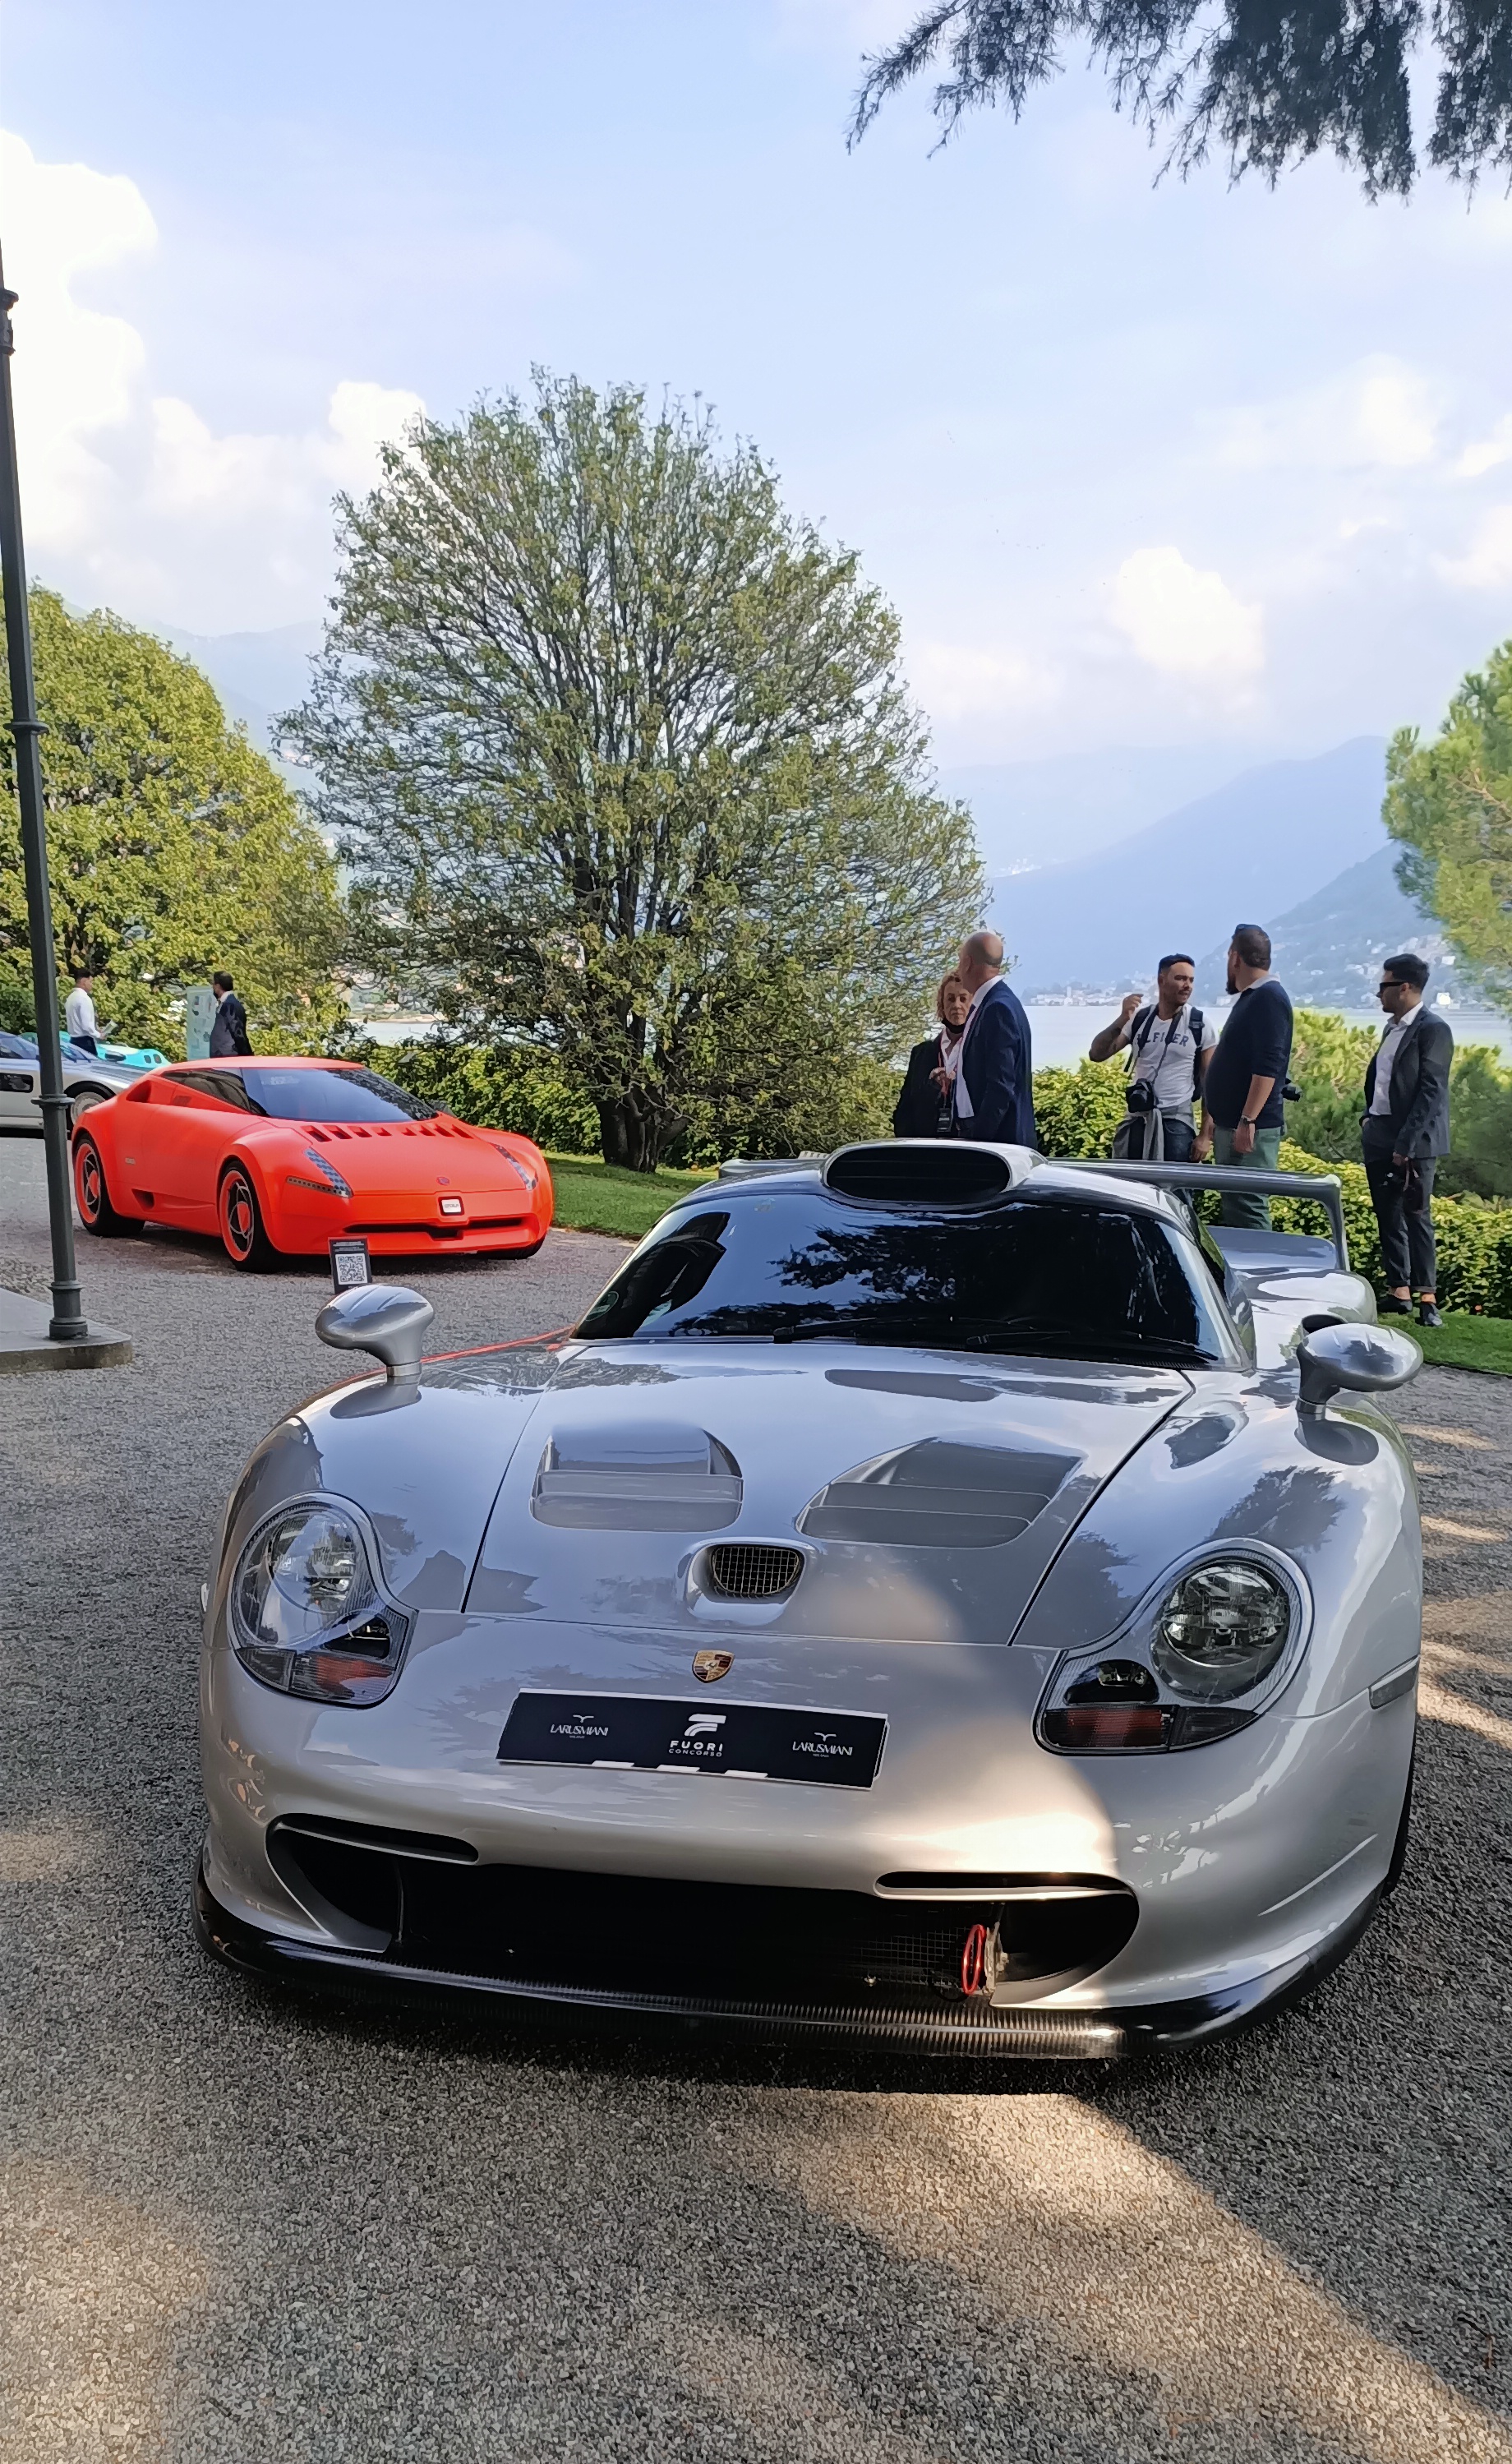 Porsche_GT1_fuoriconcorso Fuoriconcorso 2021 "Turbo" - SemanalClásico - Revista online de coches clásicos, de colección y sport